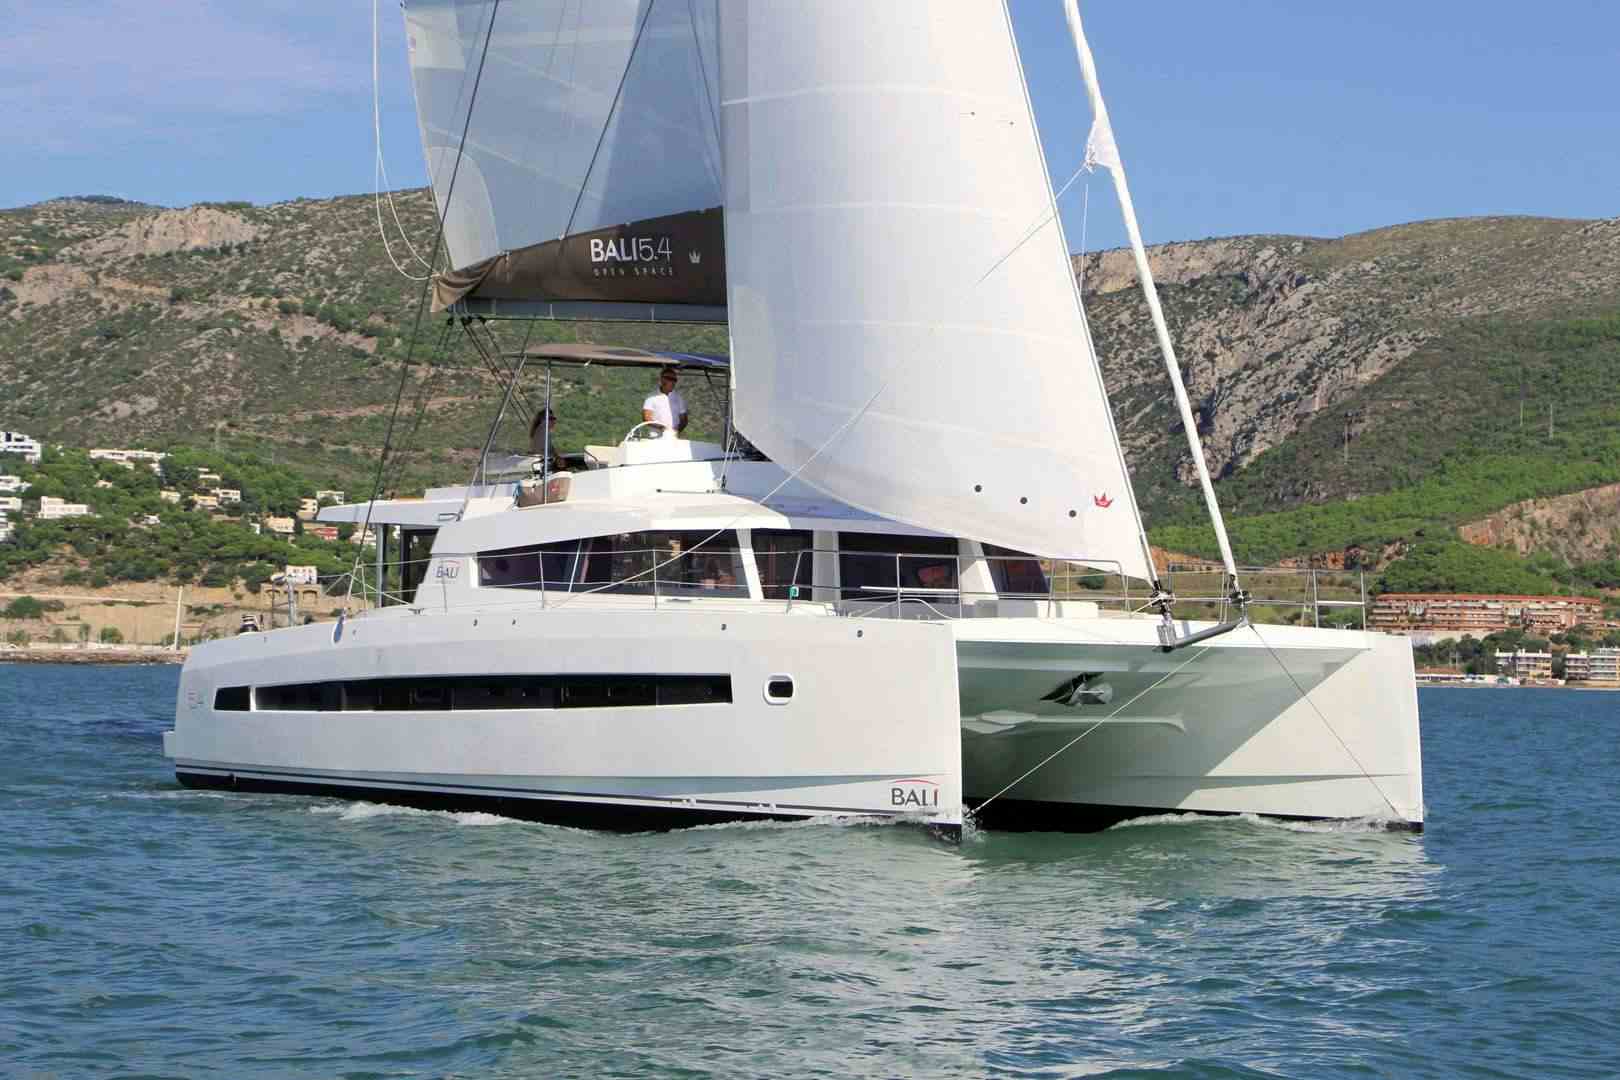 TWO OCEANS - Yacht Charter Roses & Boat hire in W. Med - Spain/Balearics, Caribbean Leewards, Caribbean Windwards, Caribbean Virgin Islands (BVI) 1